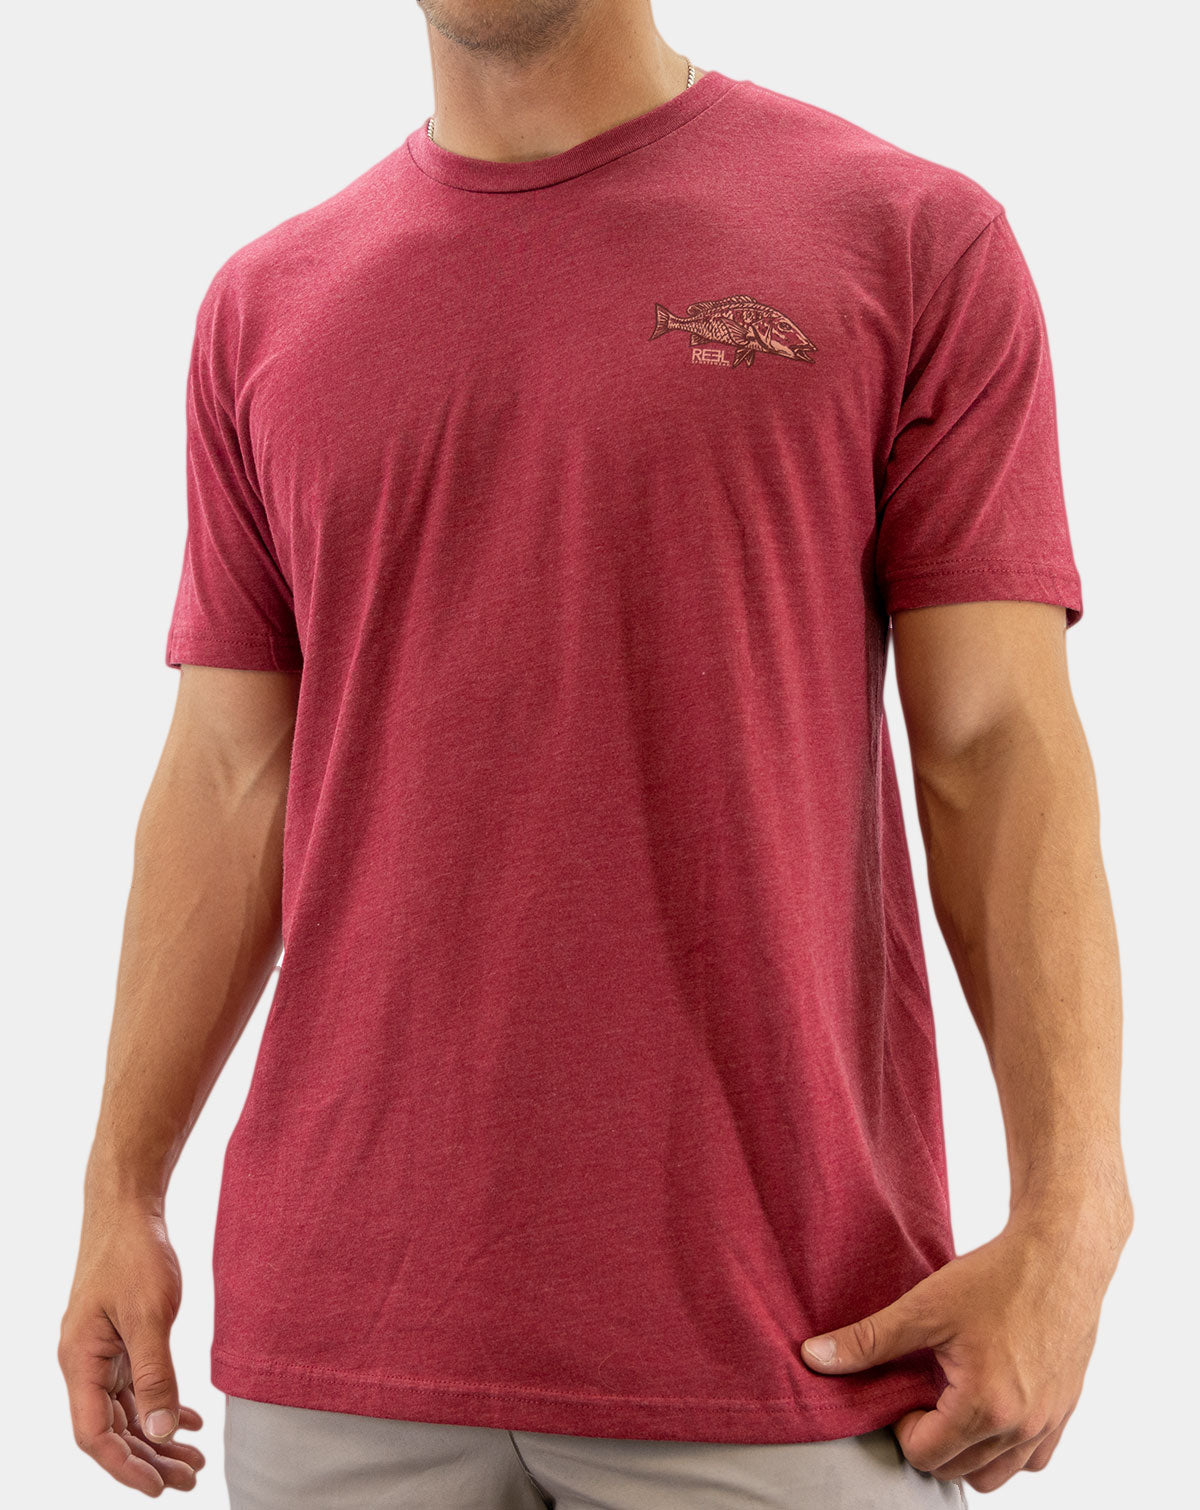 Snapper - Reel Sportswear Premium Fishing T-shirt